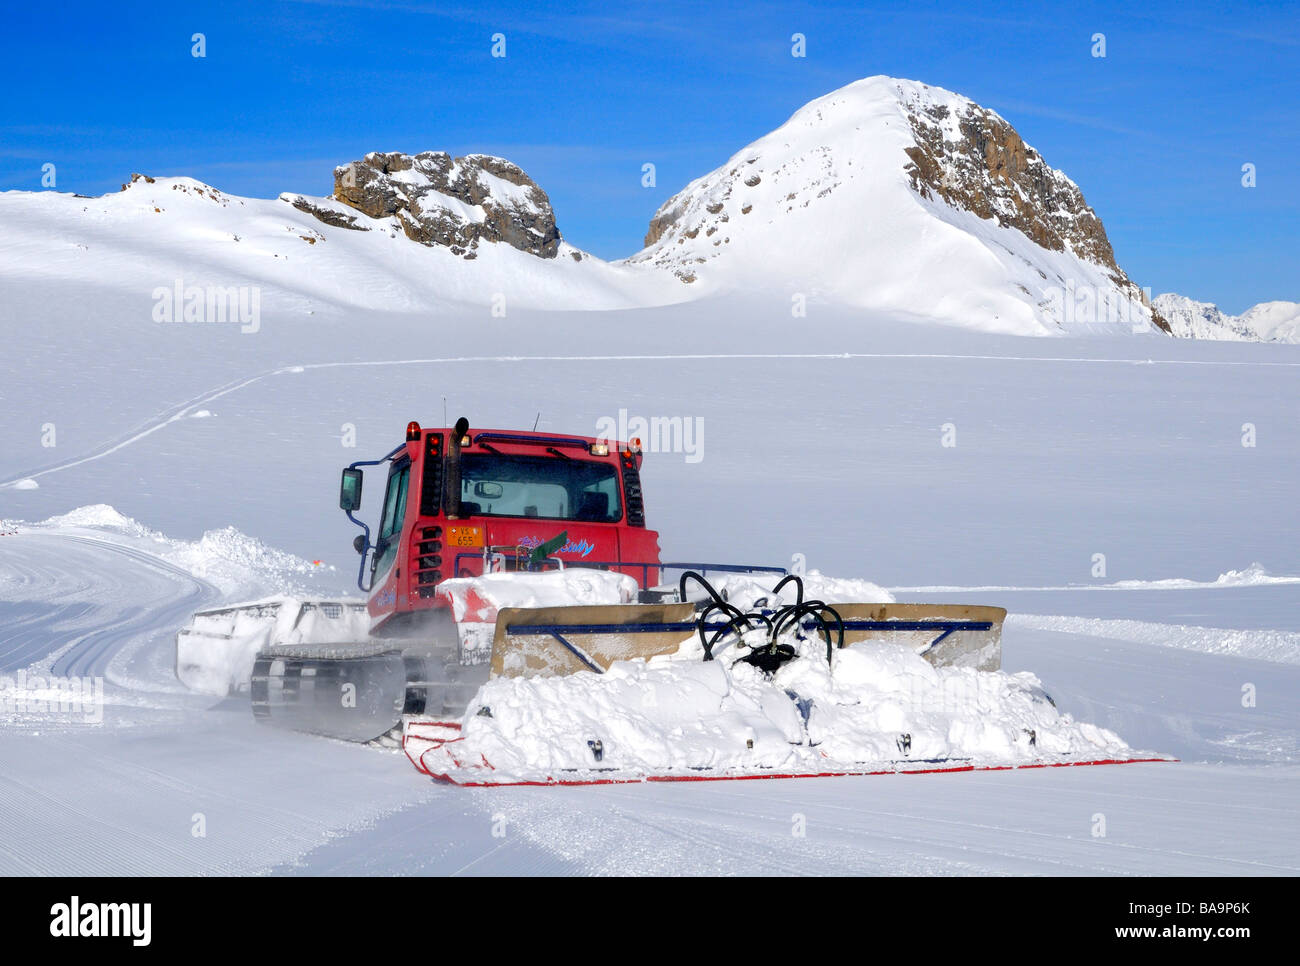 PistenBully Kässbohrer snow processing machine in action on the Plaine Morte glacier, Crans Montana, Switzerland Stock Photo